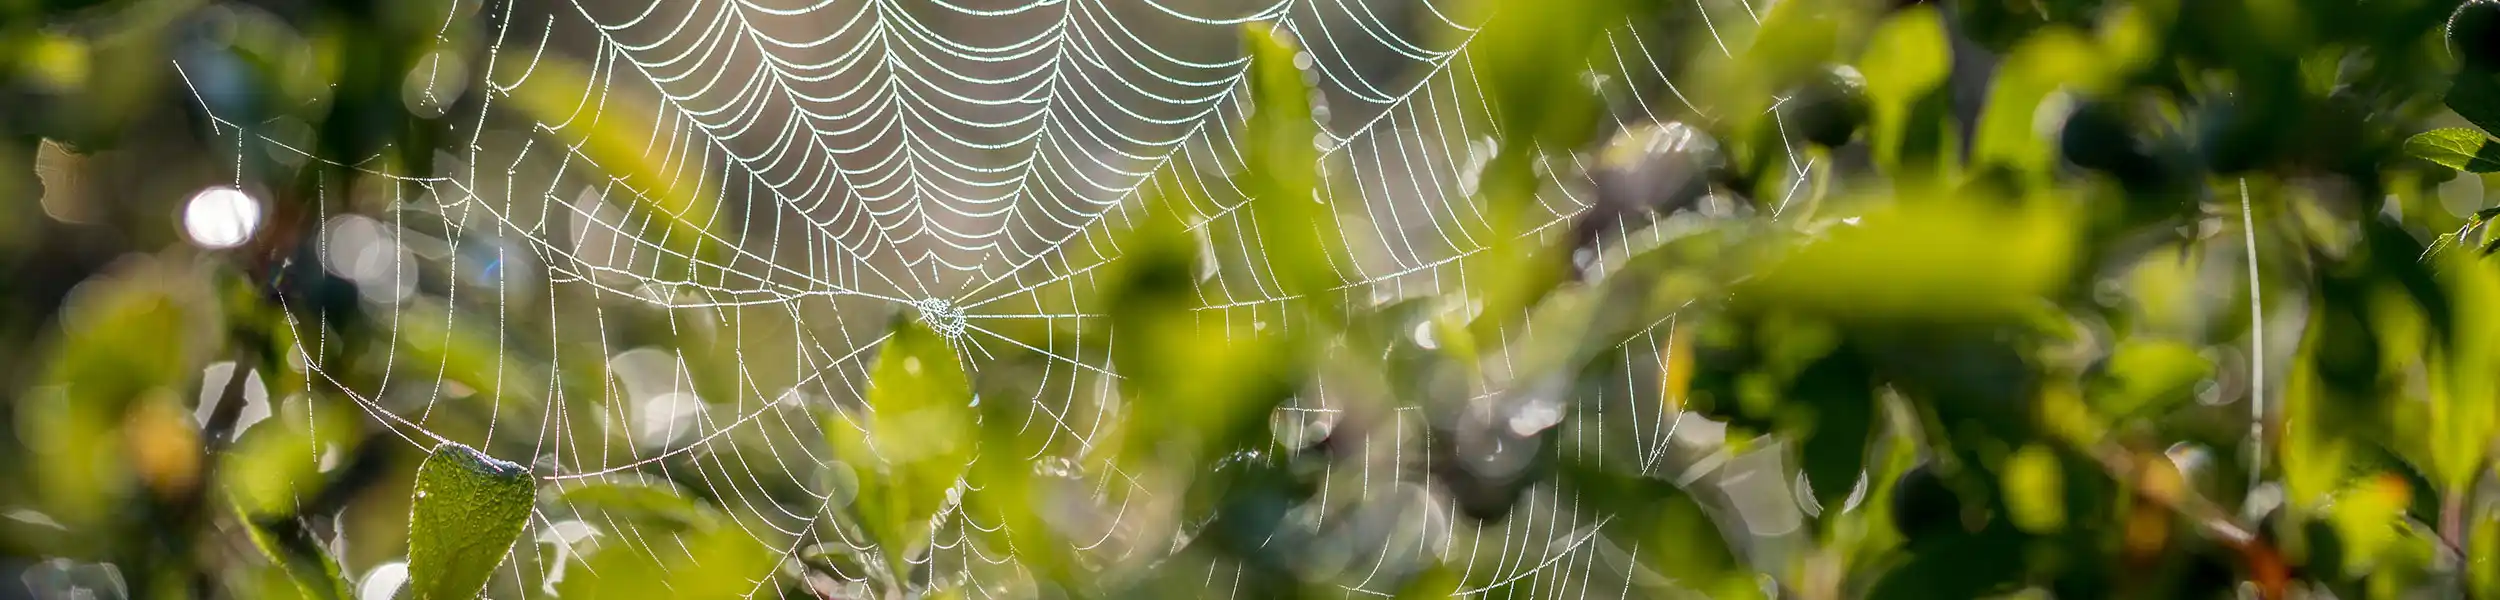 Spider web in a tree - Ja-Roy Pest Control serving Baton Rouge & Covington